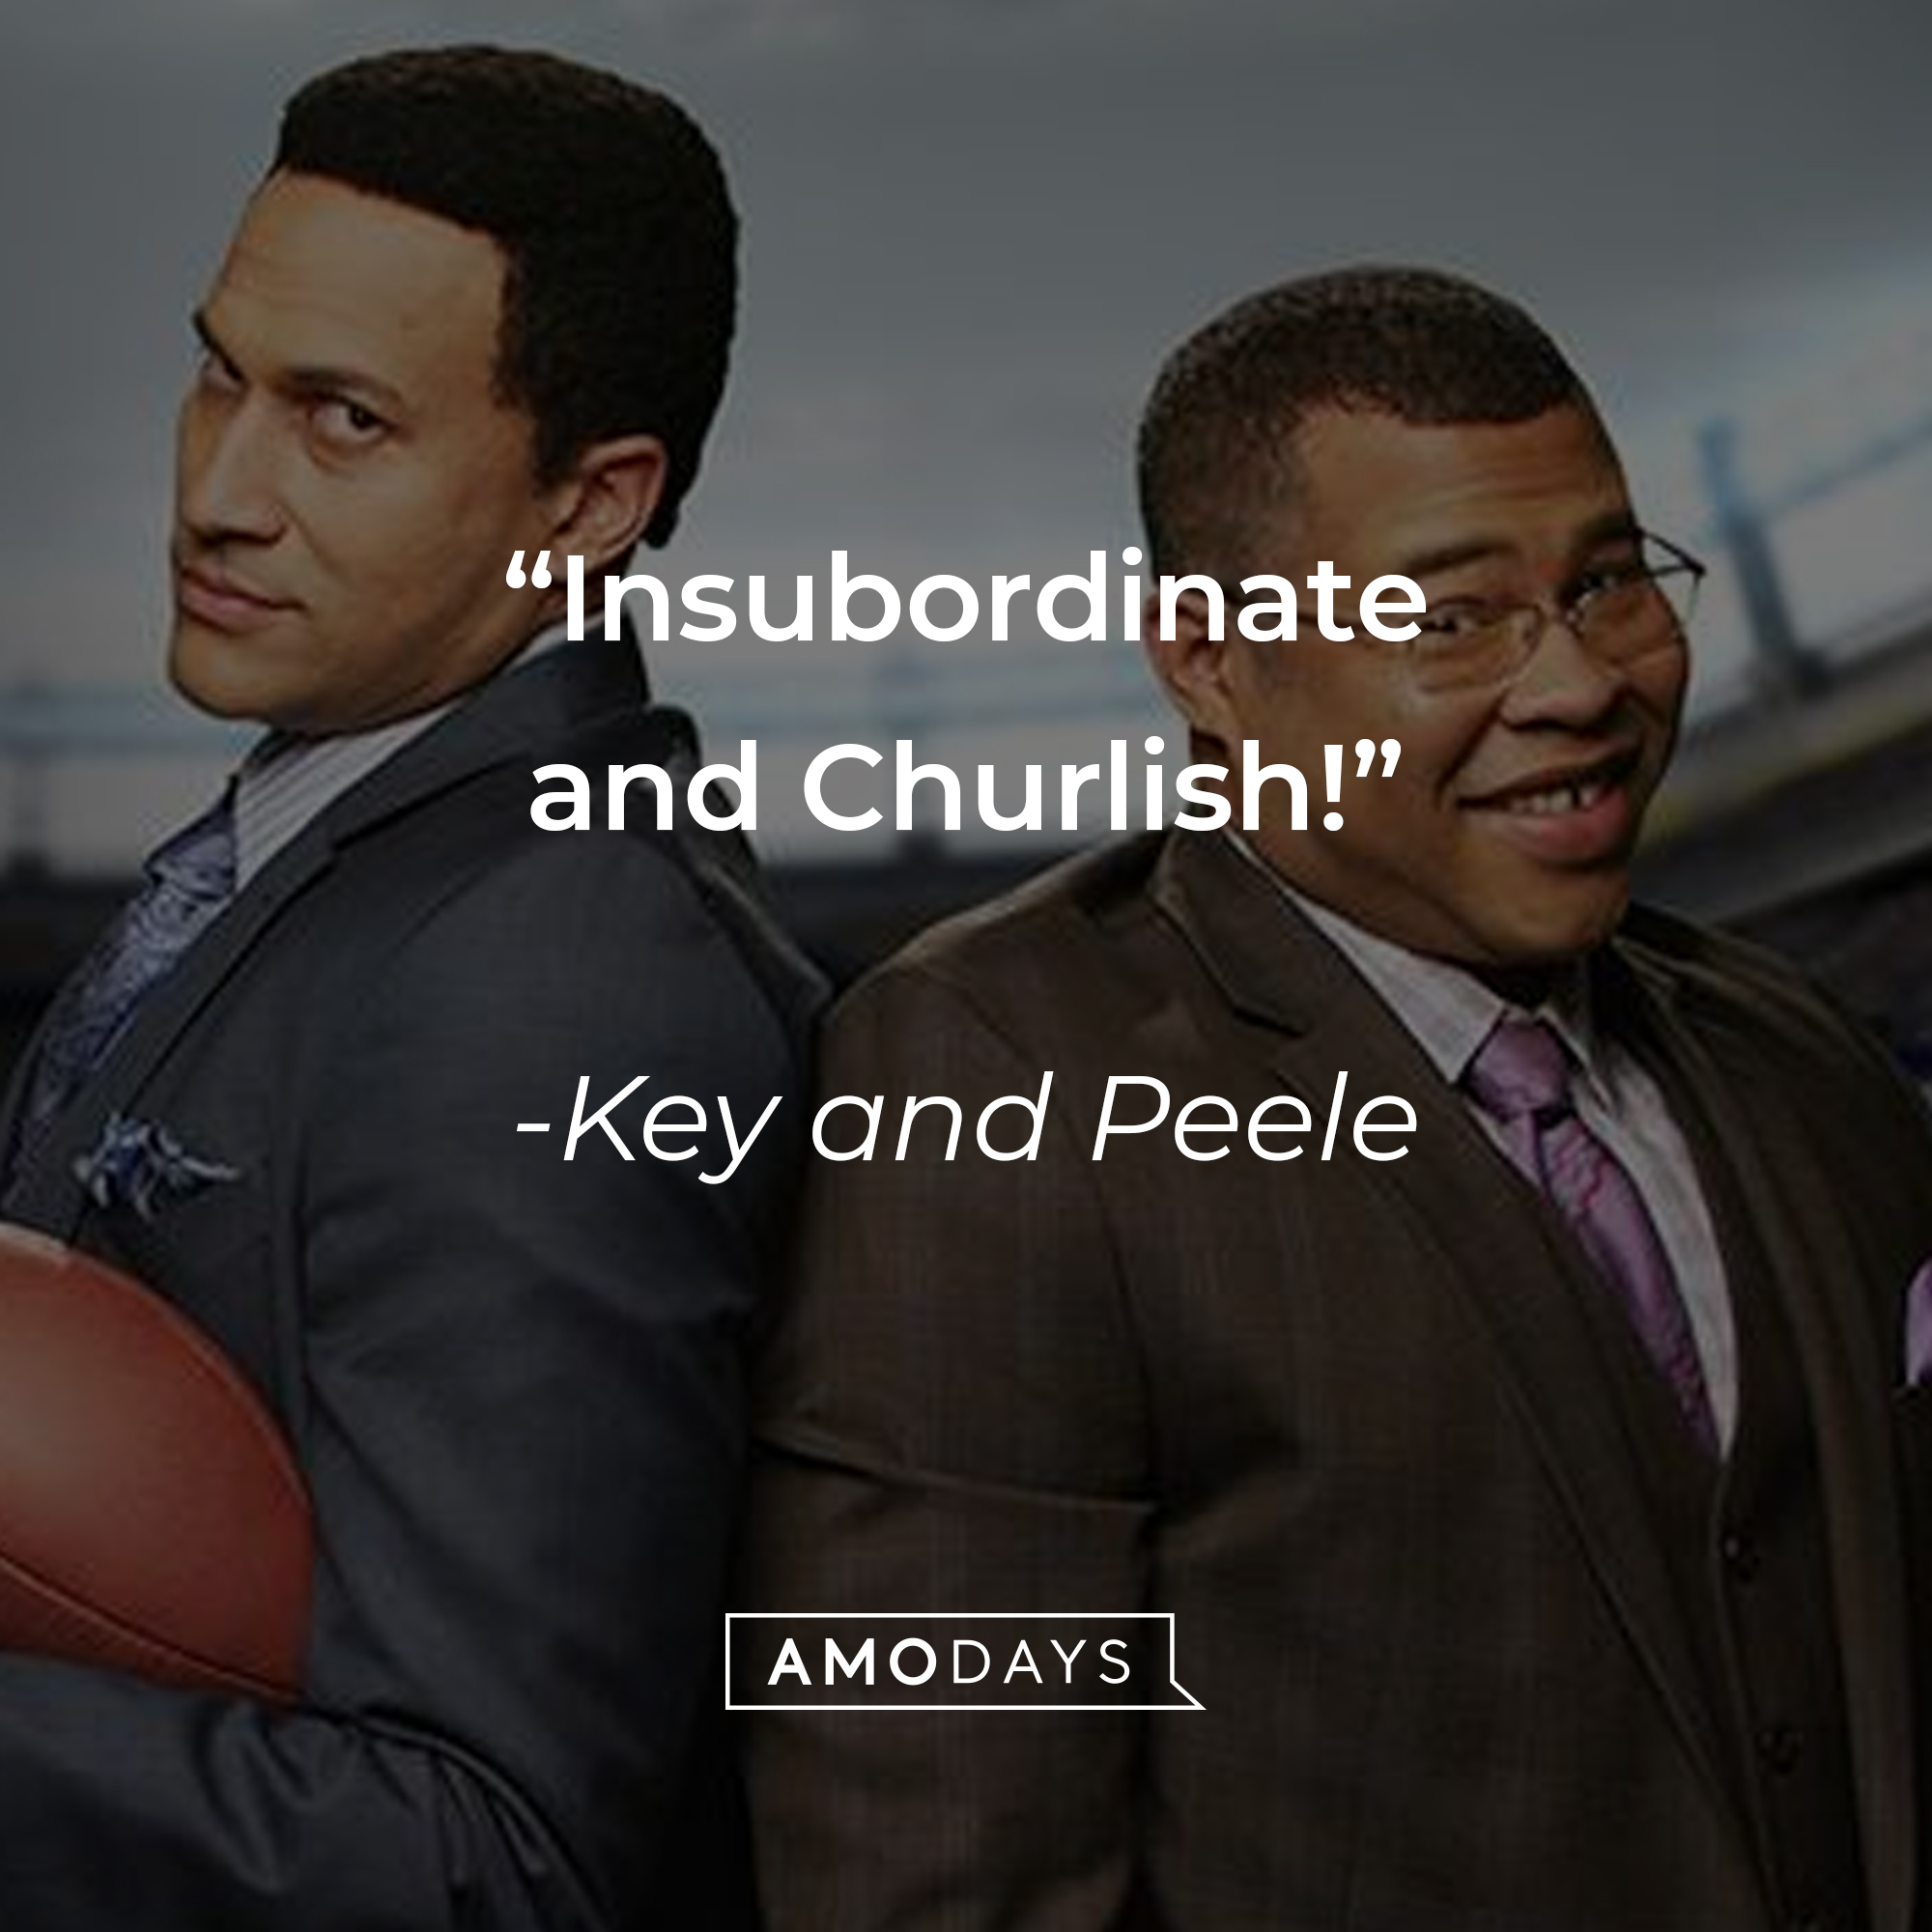 "Key and Peele's" quote: “Insubordinate and Churlish!" | Source: facebook.com/KeyAndPeele